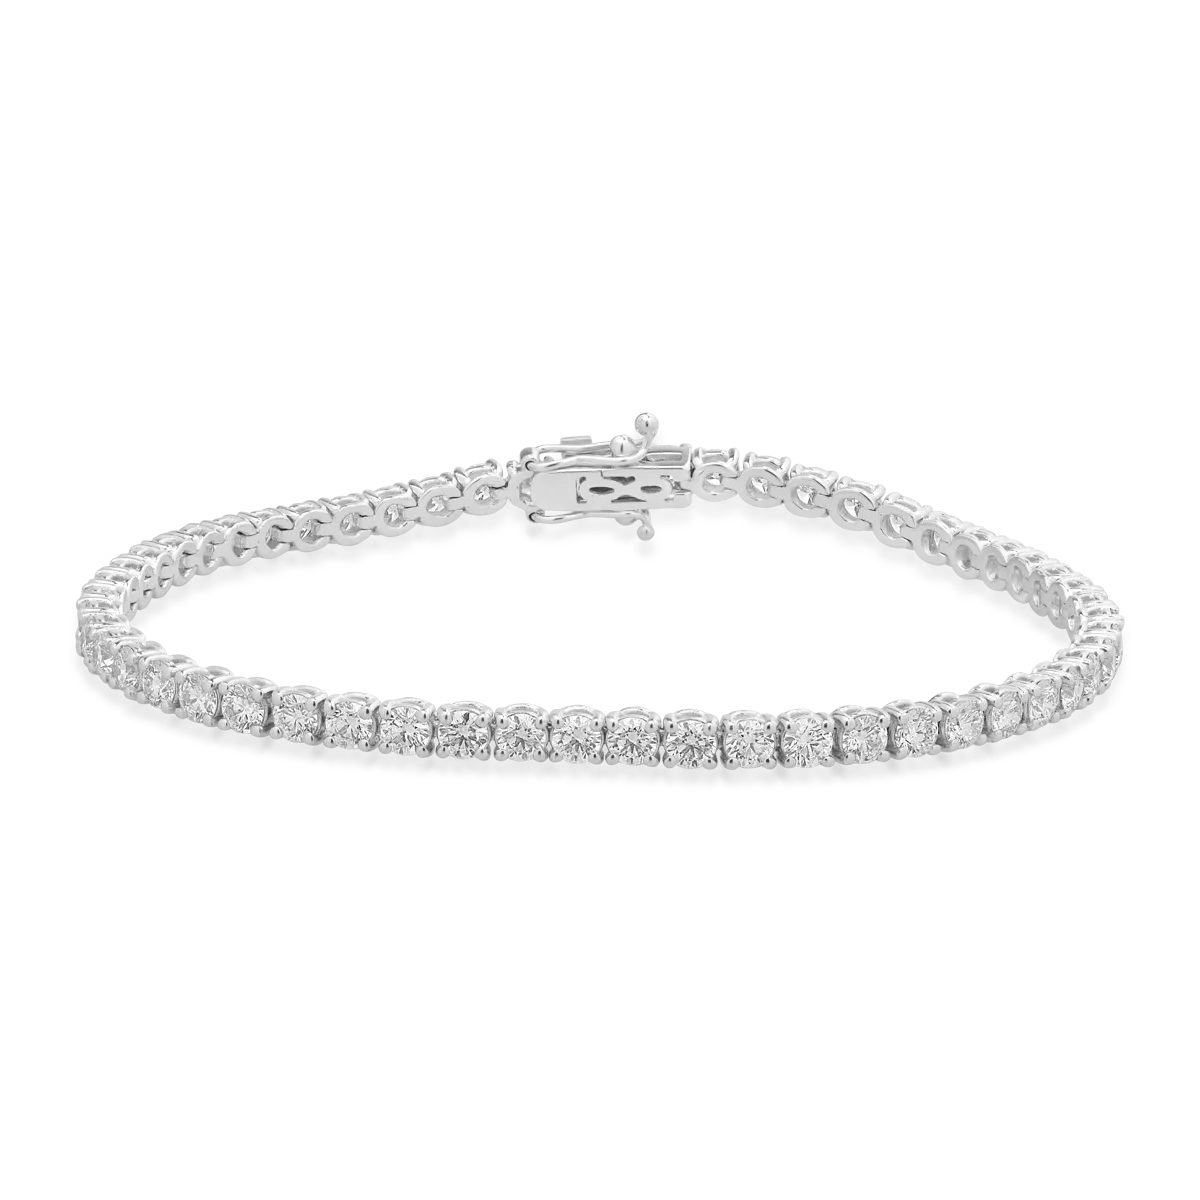 18K white gold tennis bracelet with 5ct diamonds